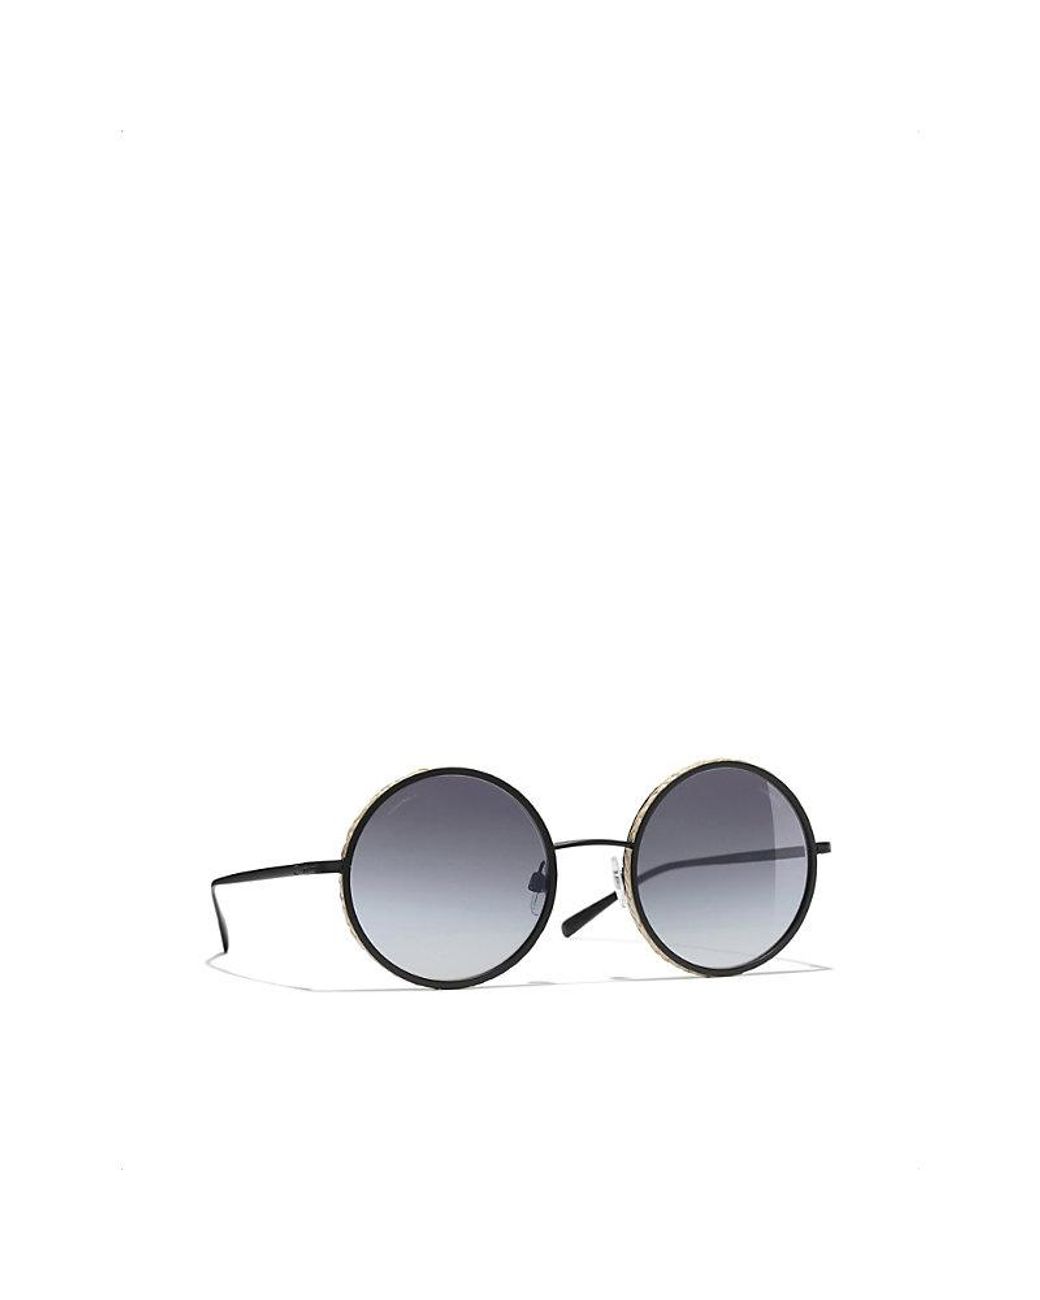 Chanel Round Sunglasses in Black | Lyst